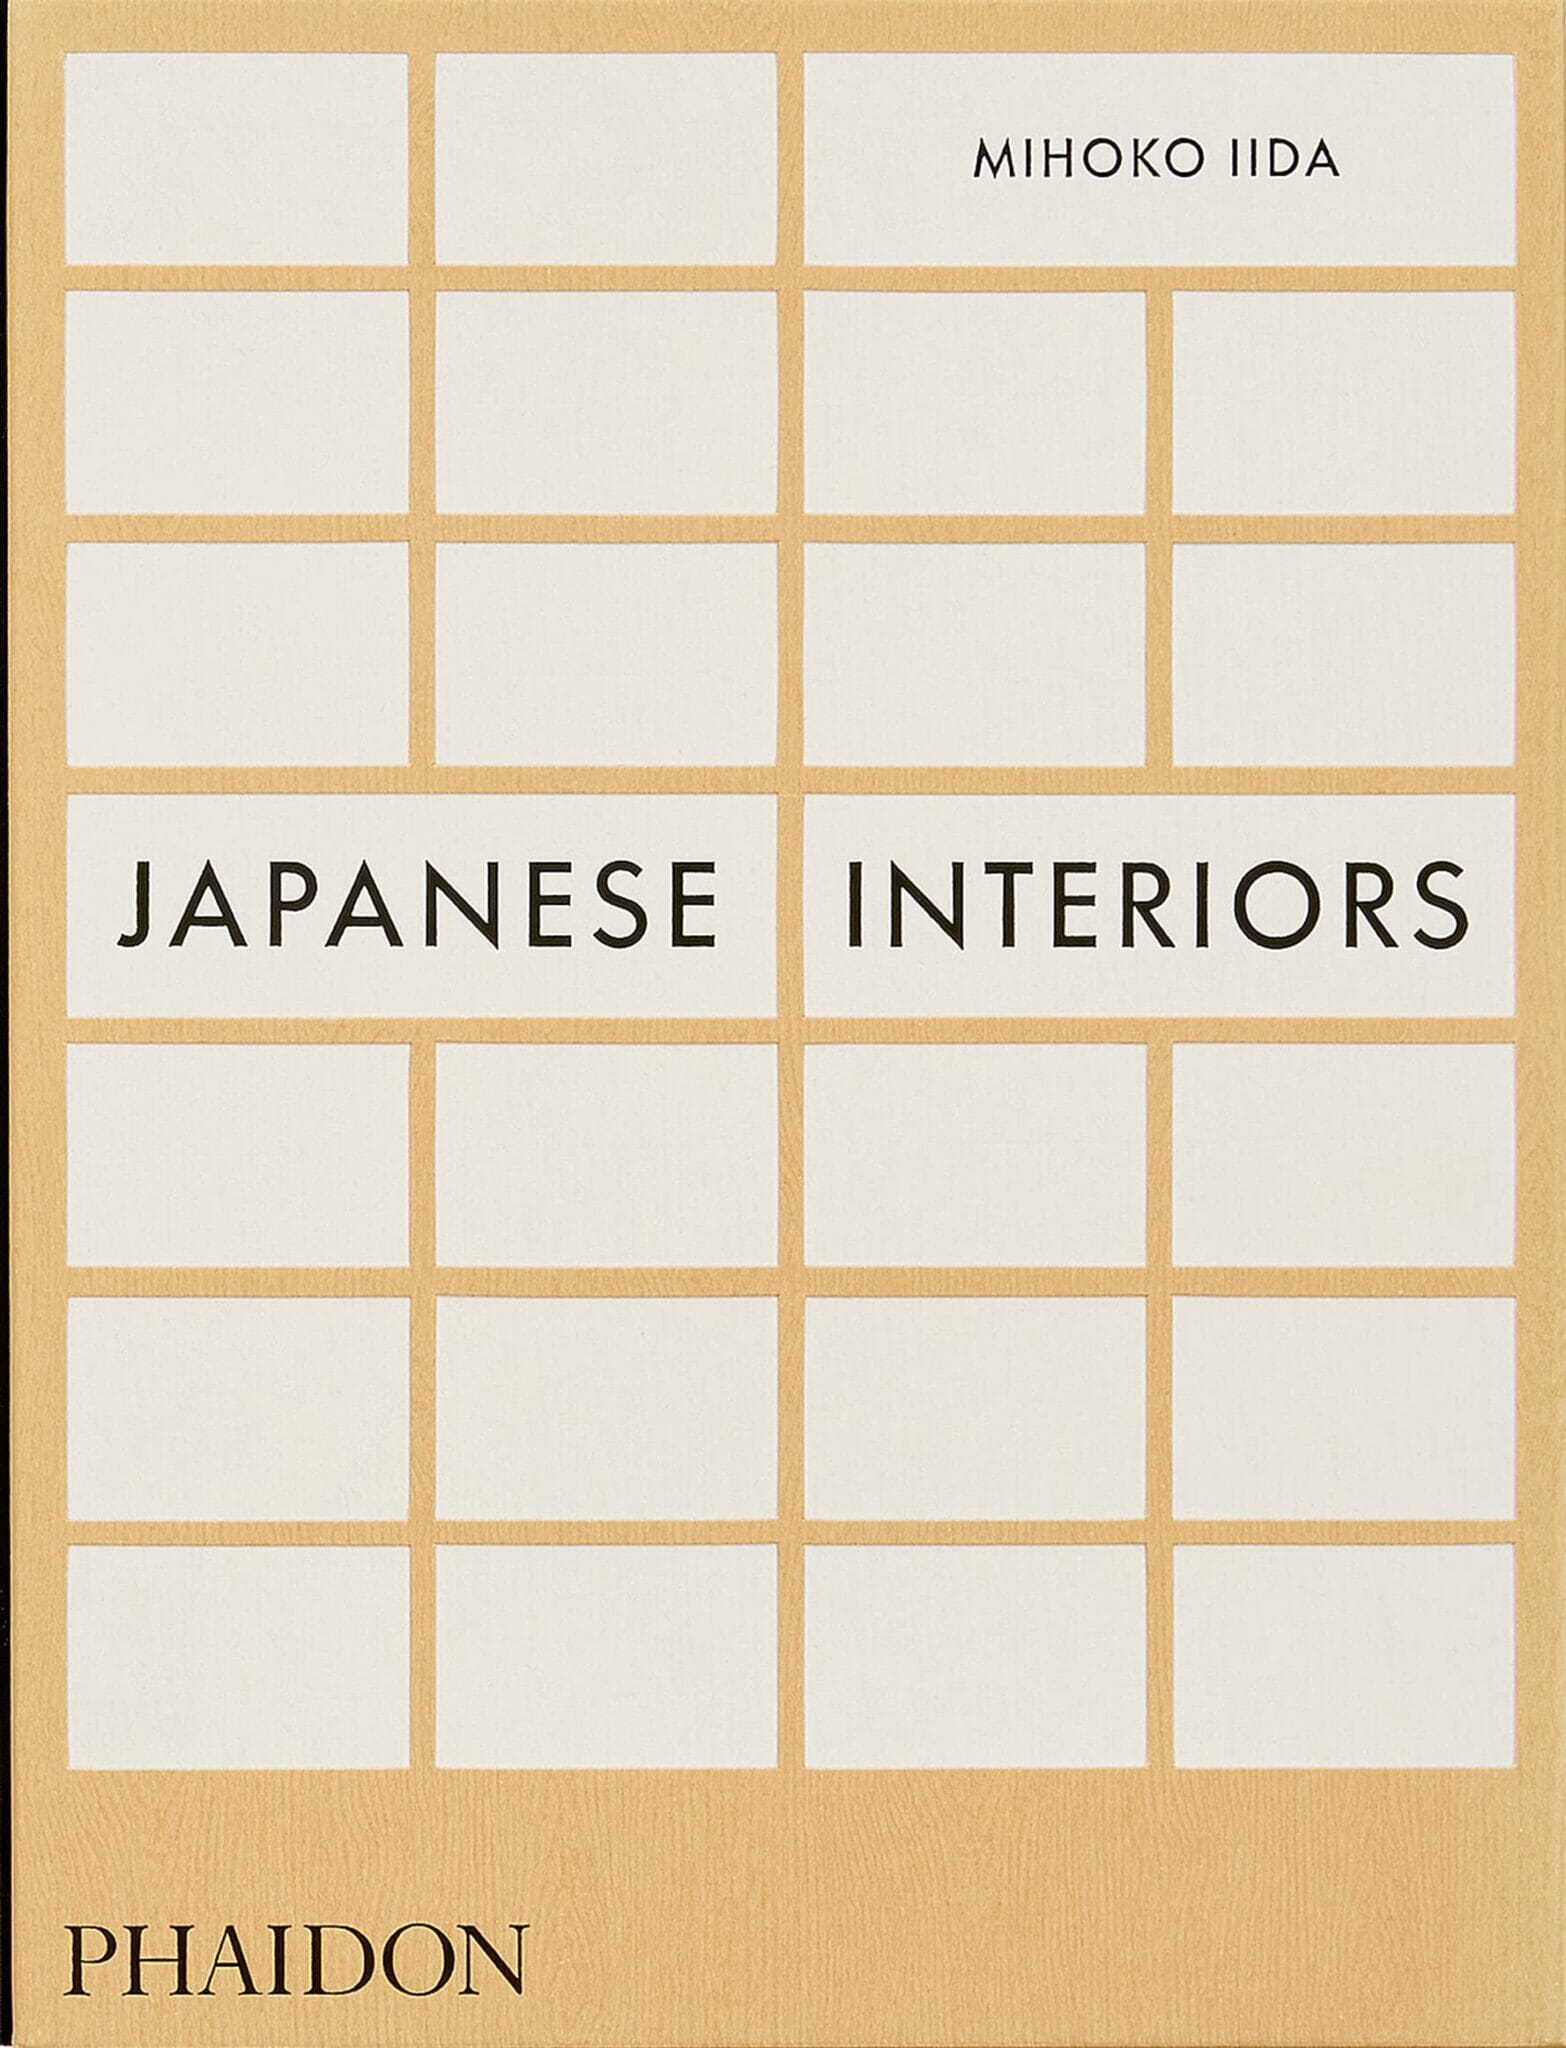 Bilde av New-mags - New-mags Boken Japanese Interiors - Lunehjem.no - Interiør På Nett